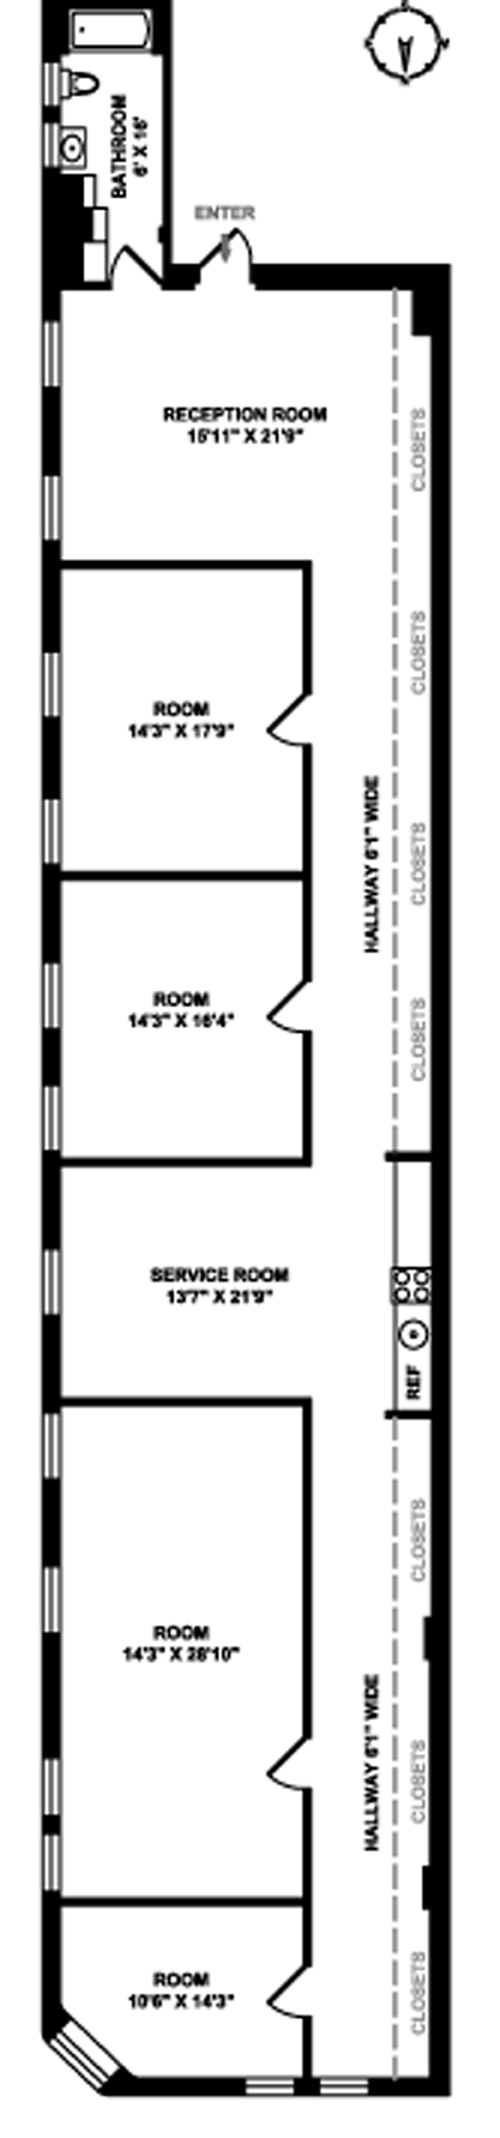 Floorplan for 510 Laguardia Place